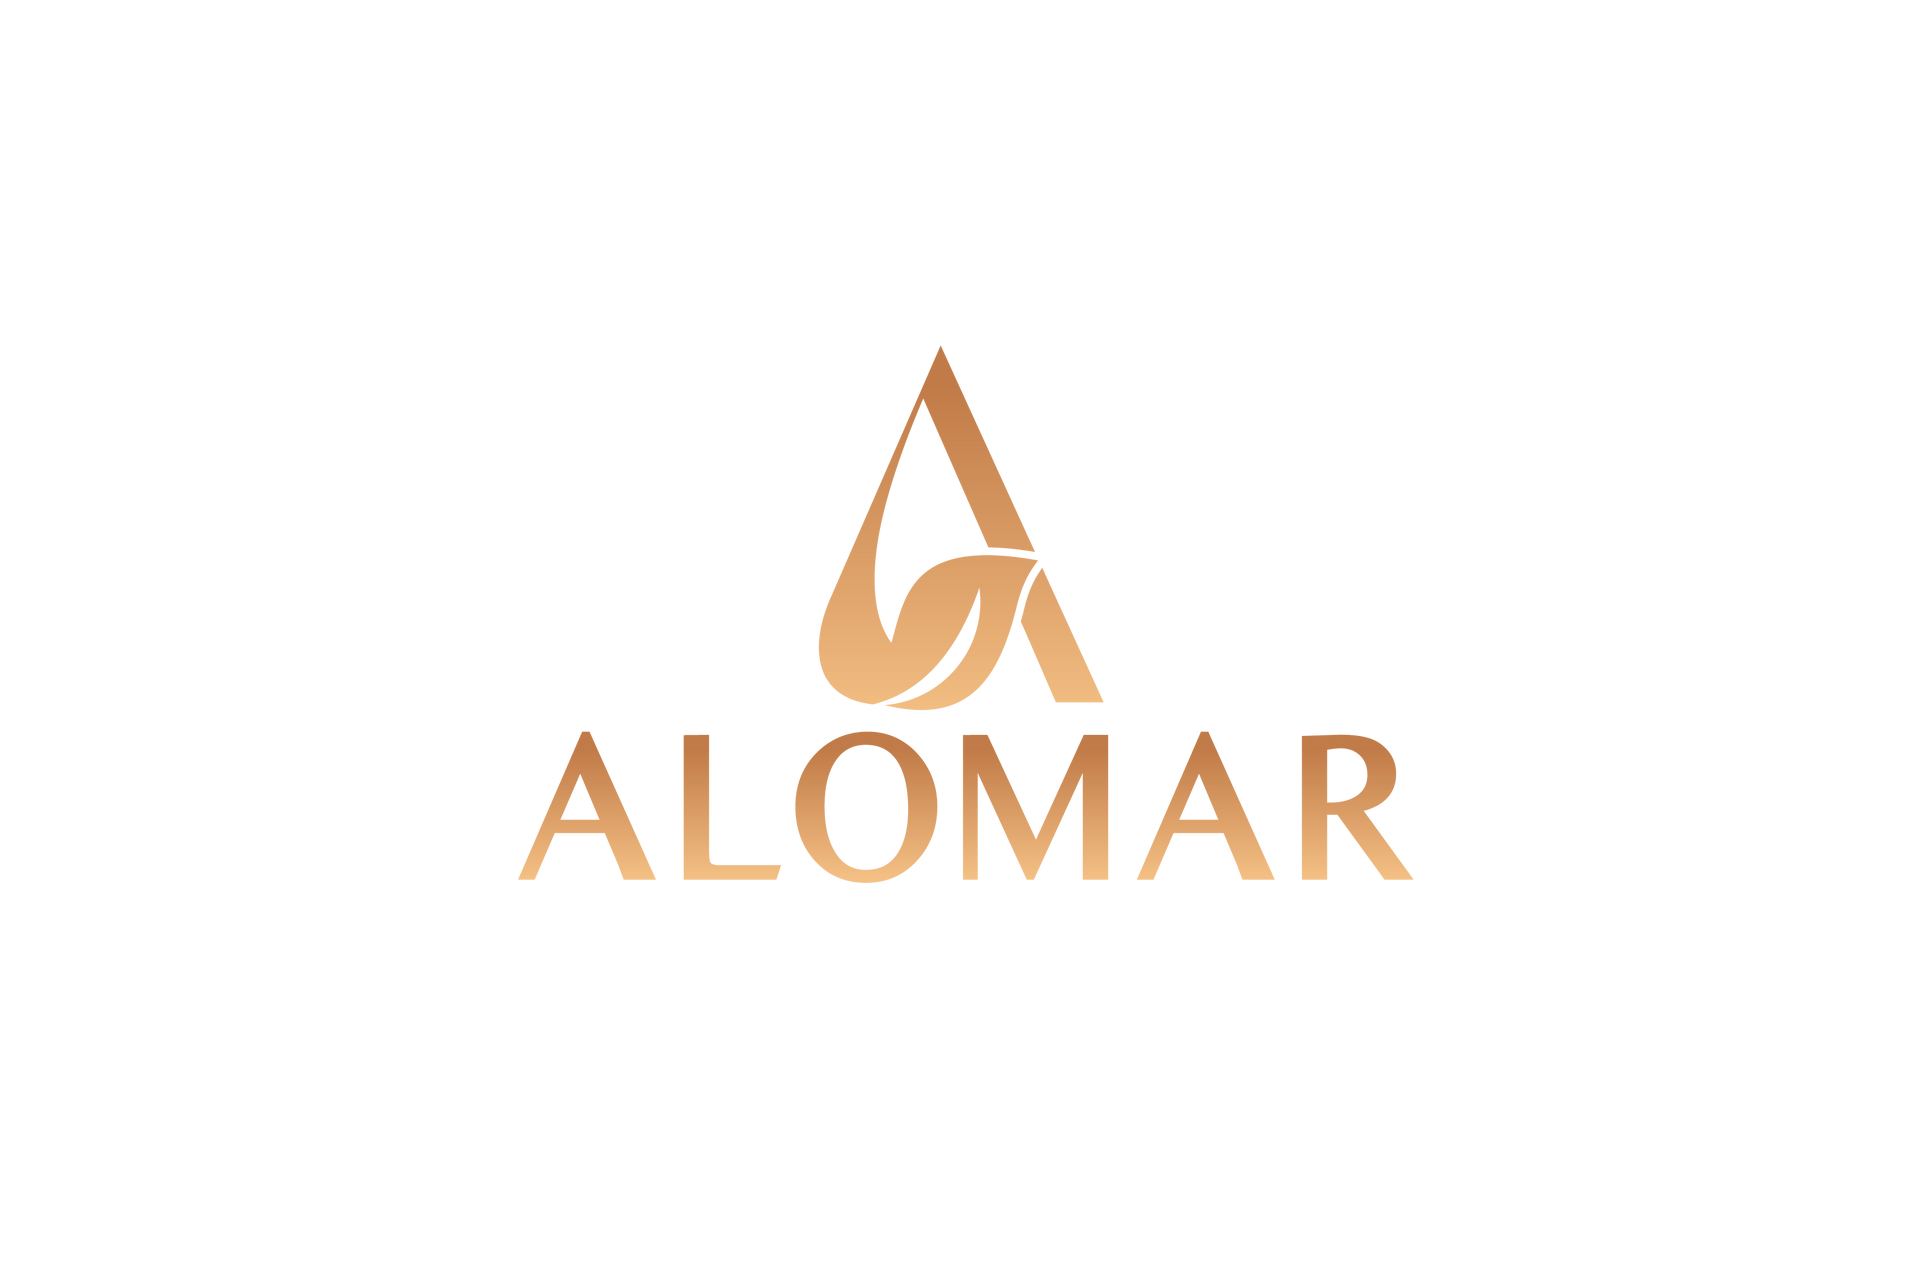 Alomar Aesthetics & Wellness Business Logo